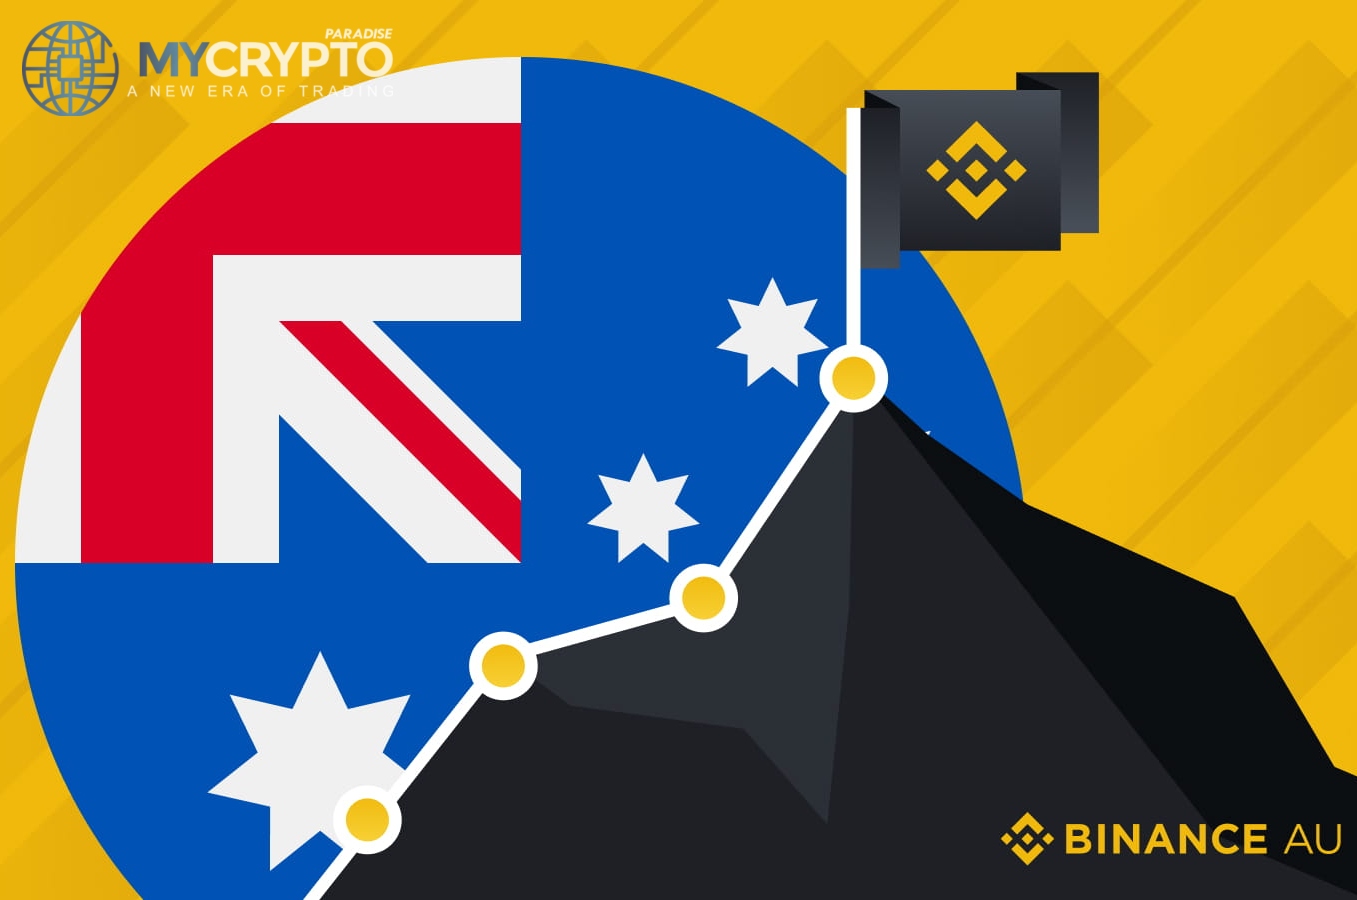 Binance CEO in Australia says regulations will improve crypto standards